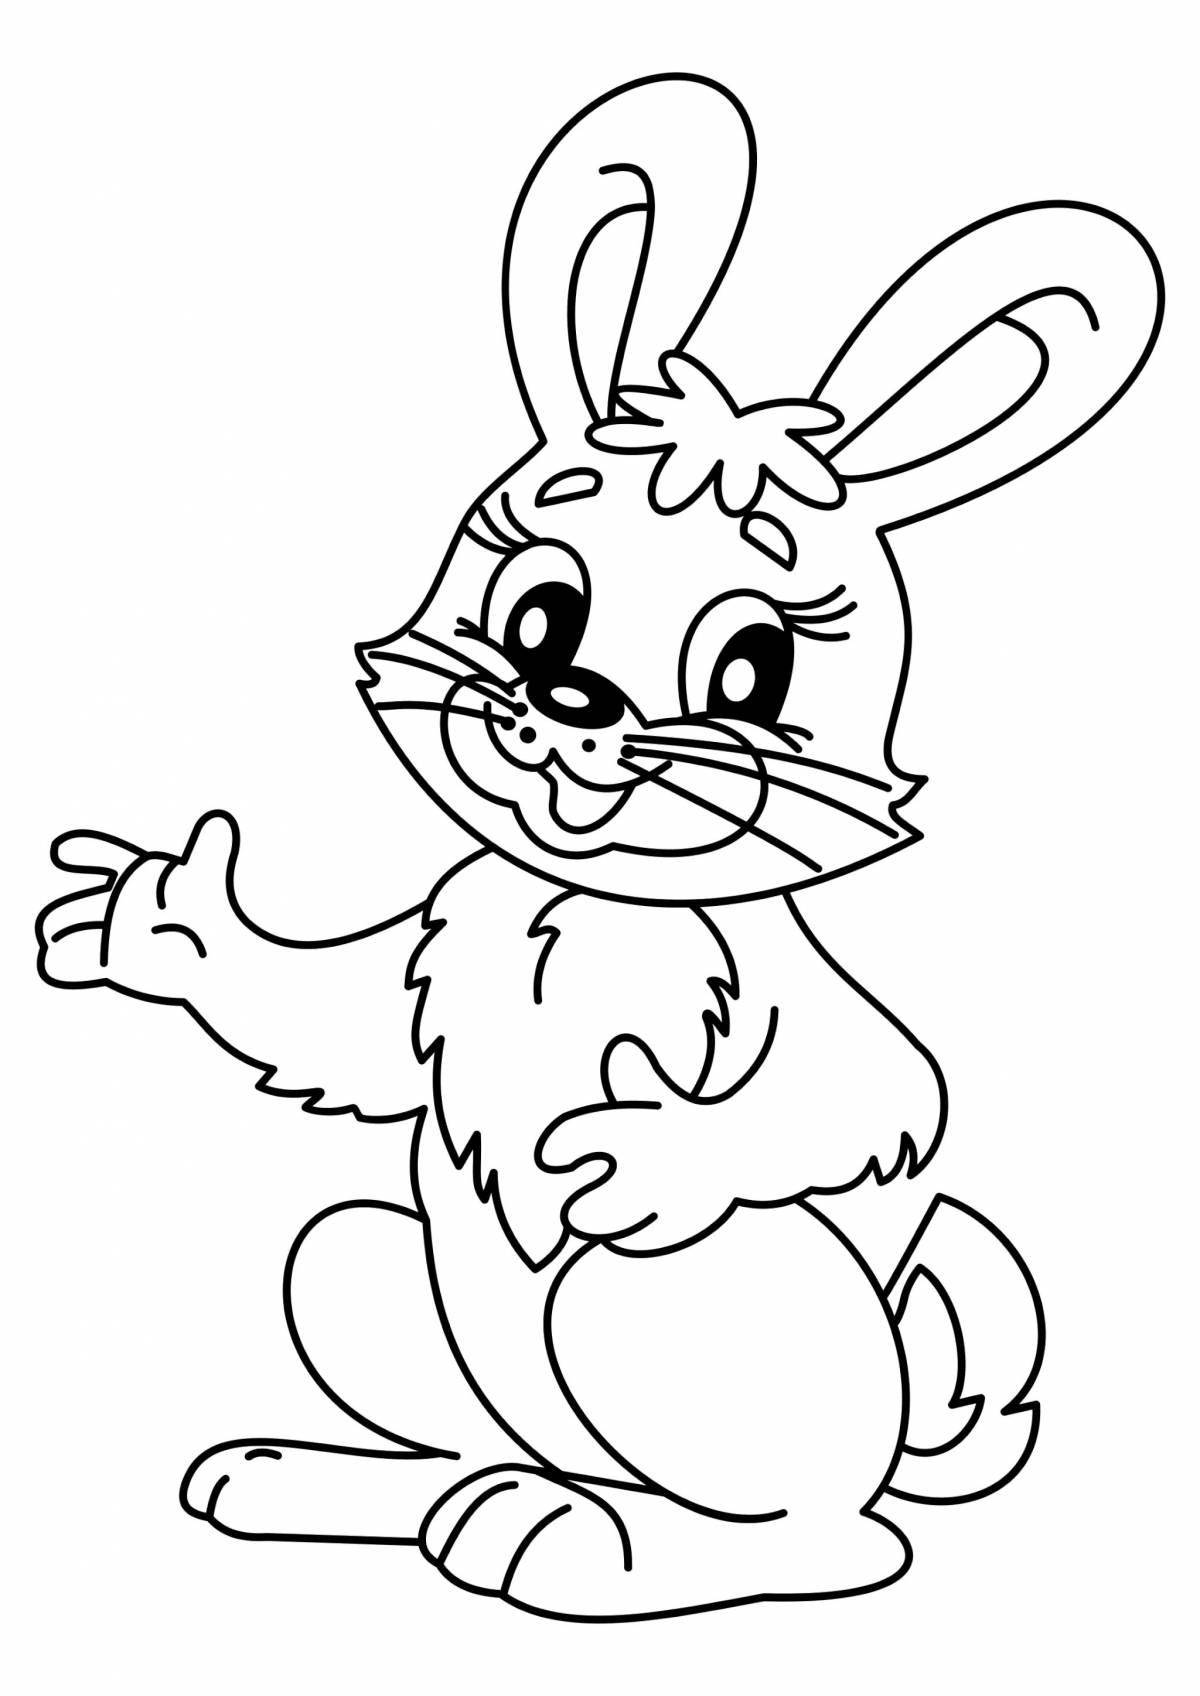 Fun bunny drawing for kids